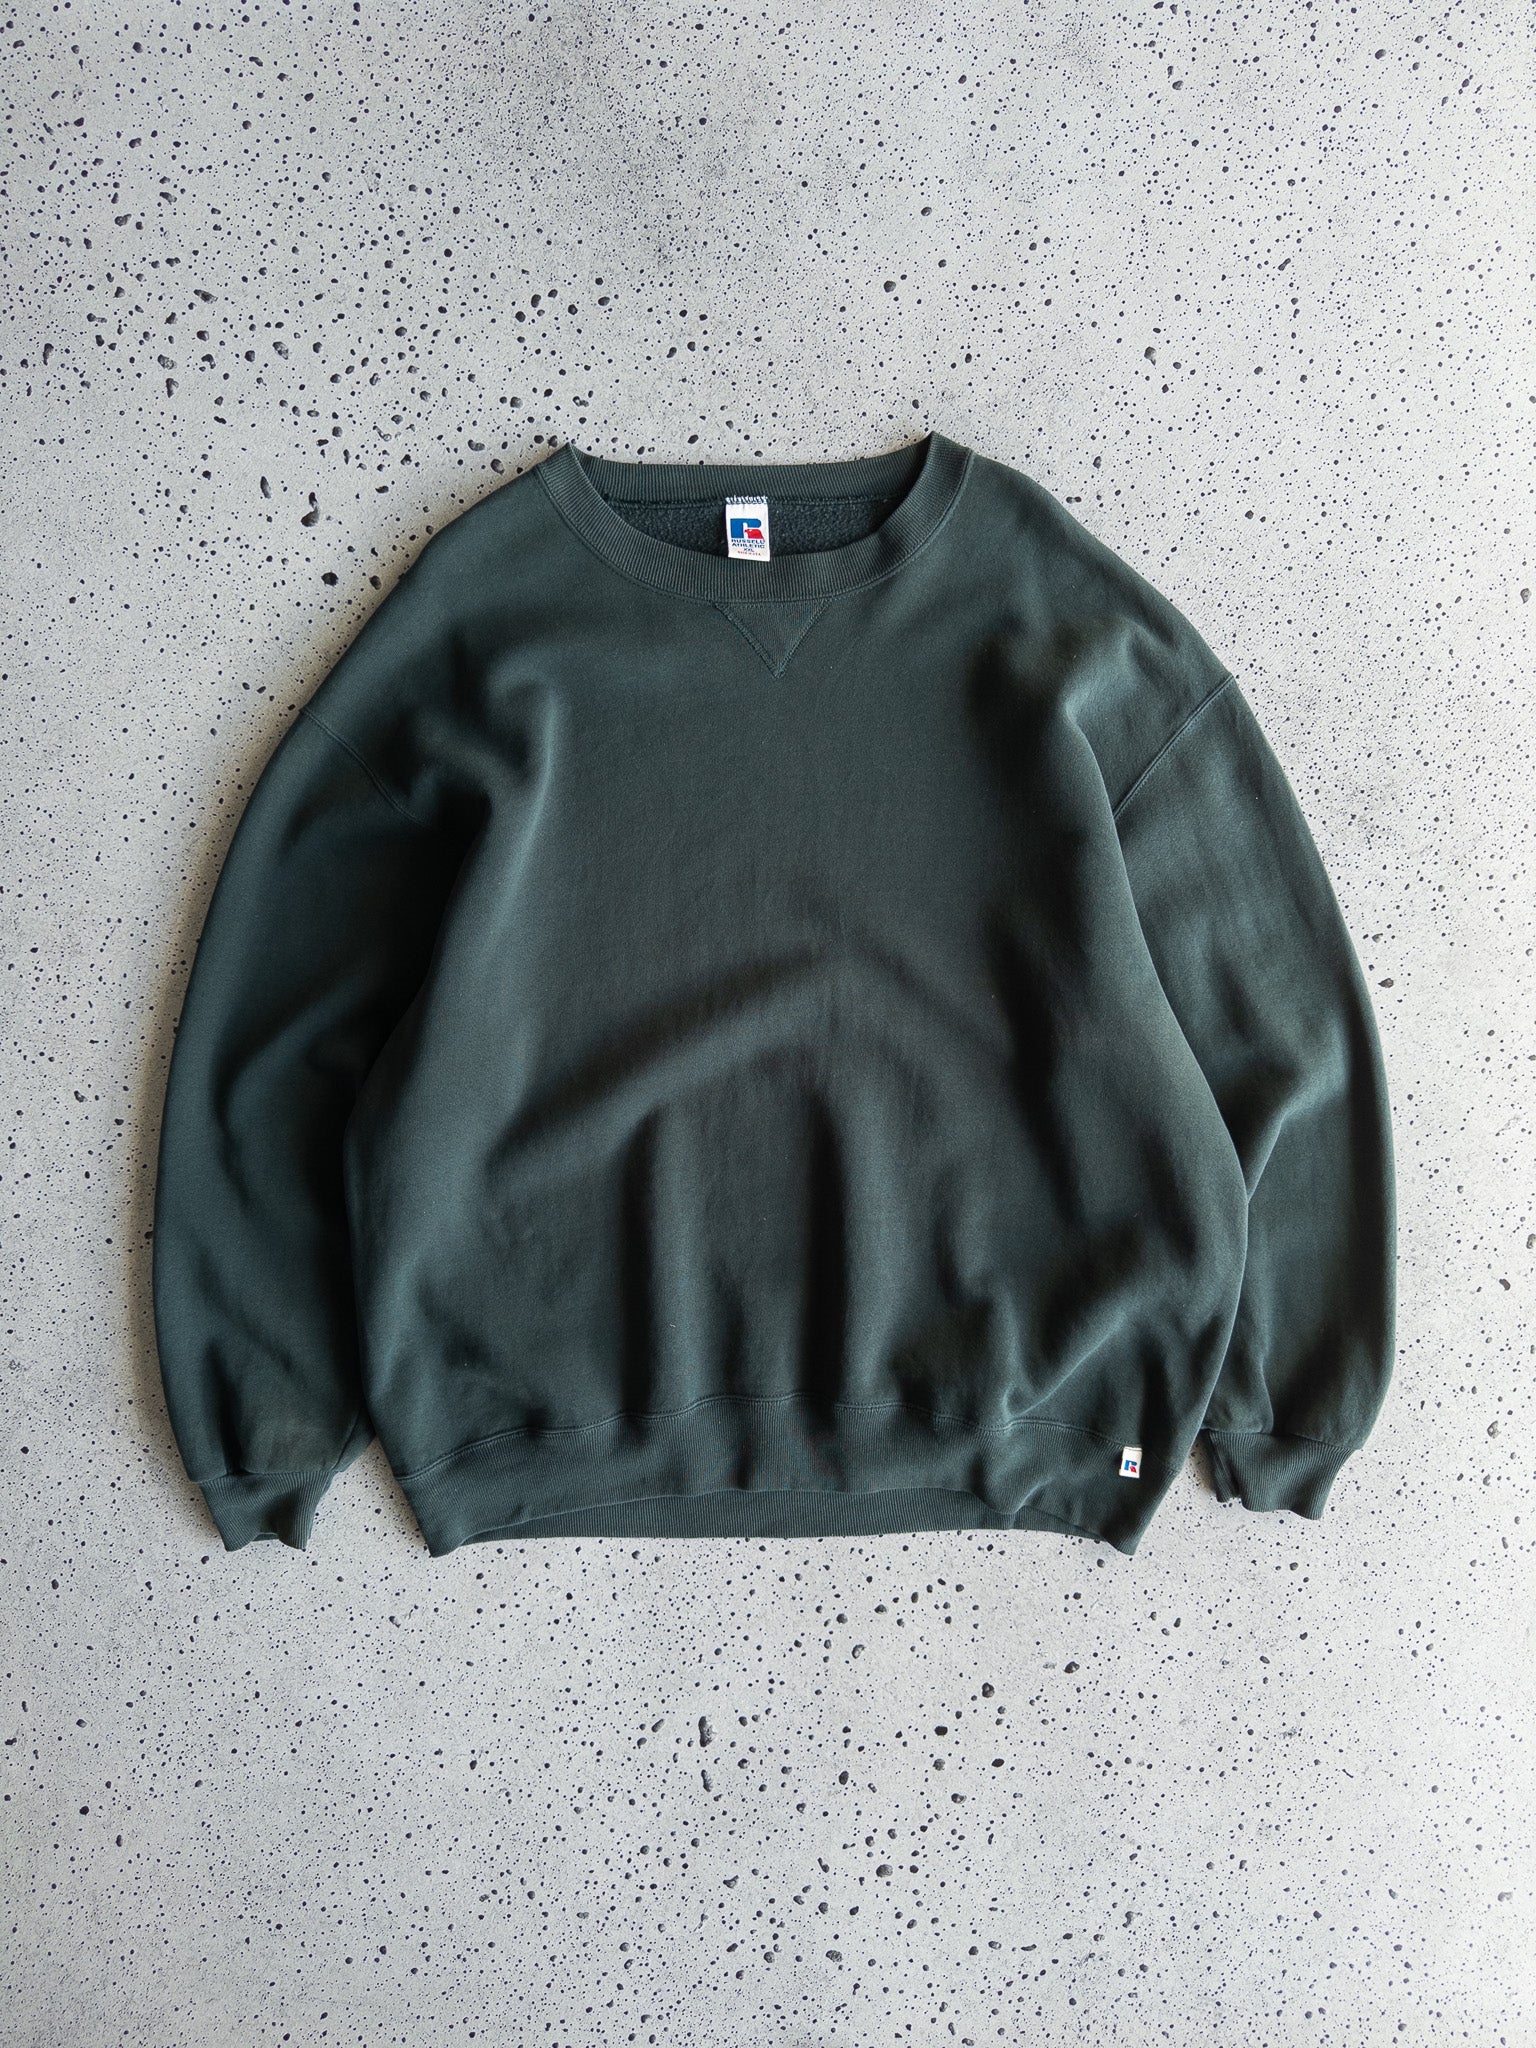 Vintage Russell Sweatshirt (XXL)